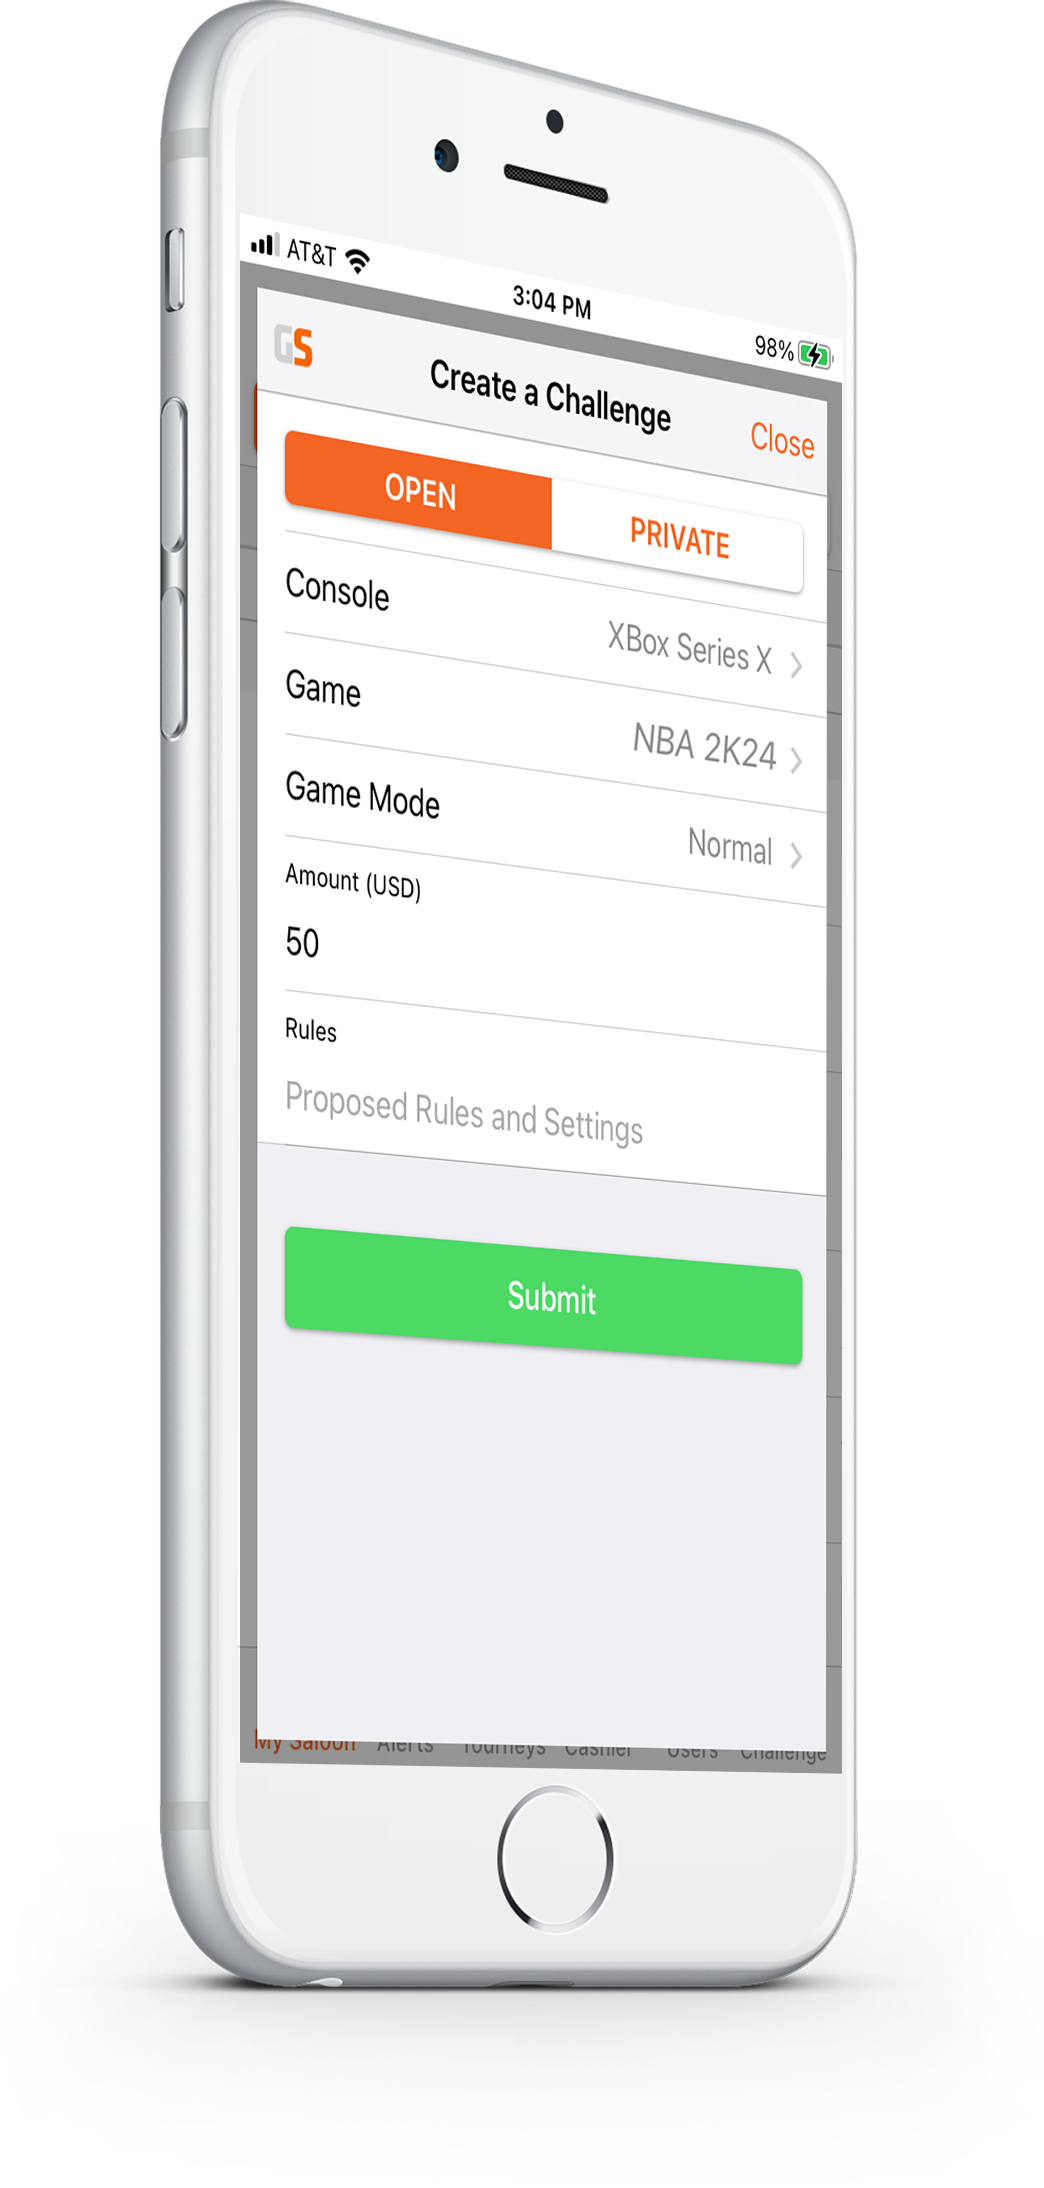 Setup 1v1 NBA2K matches on your phone.